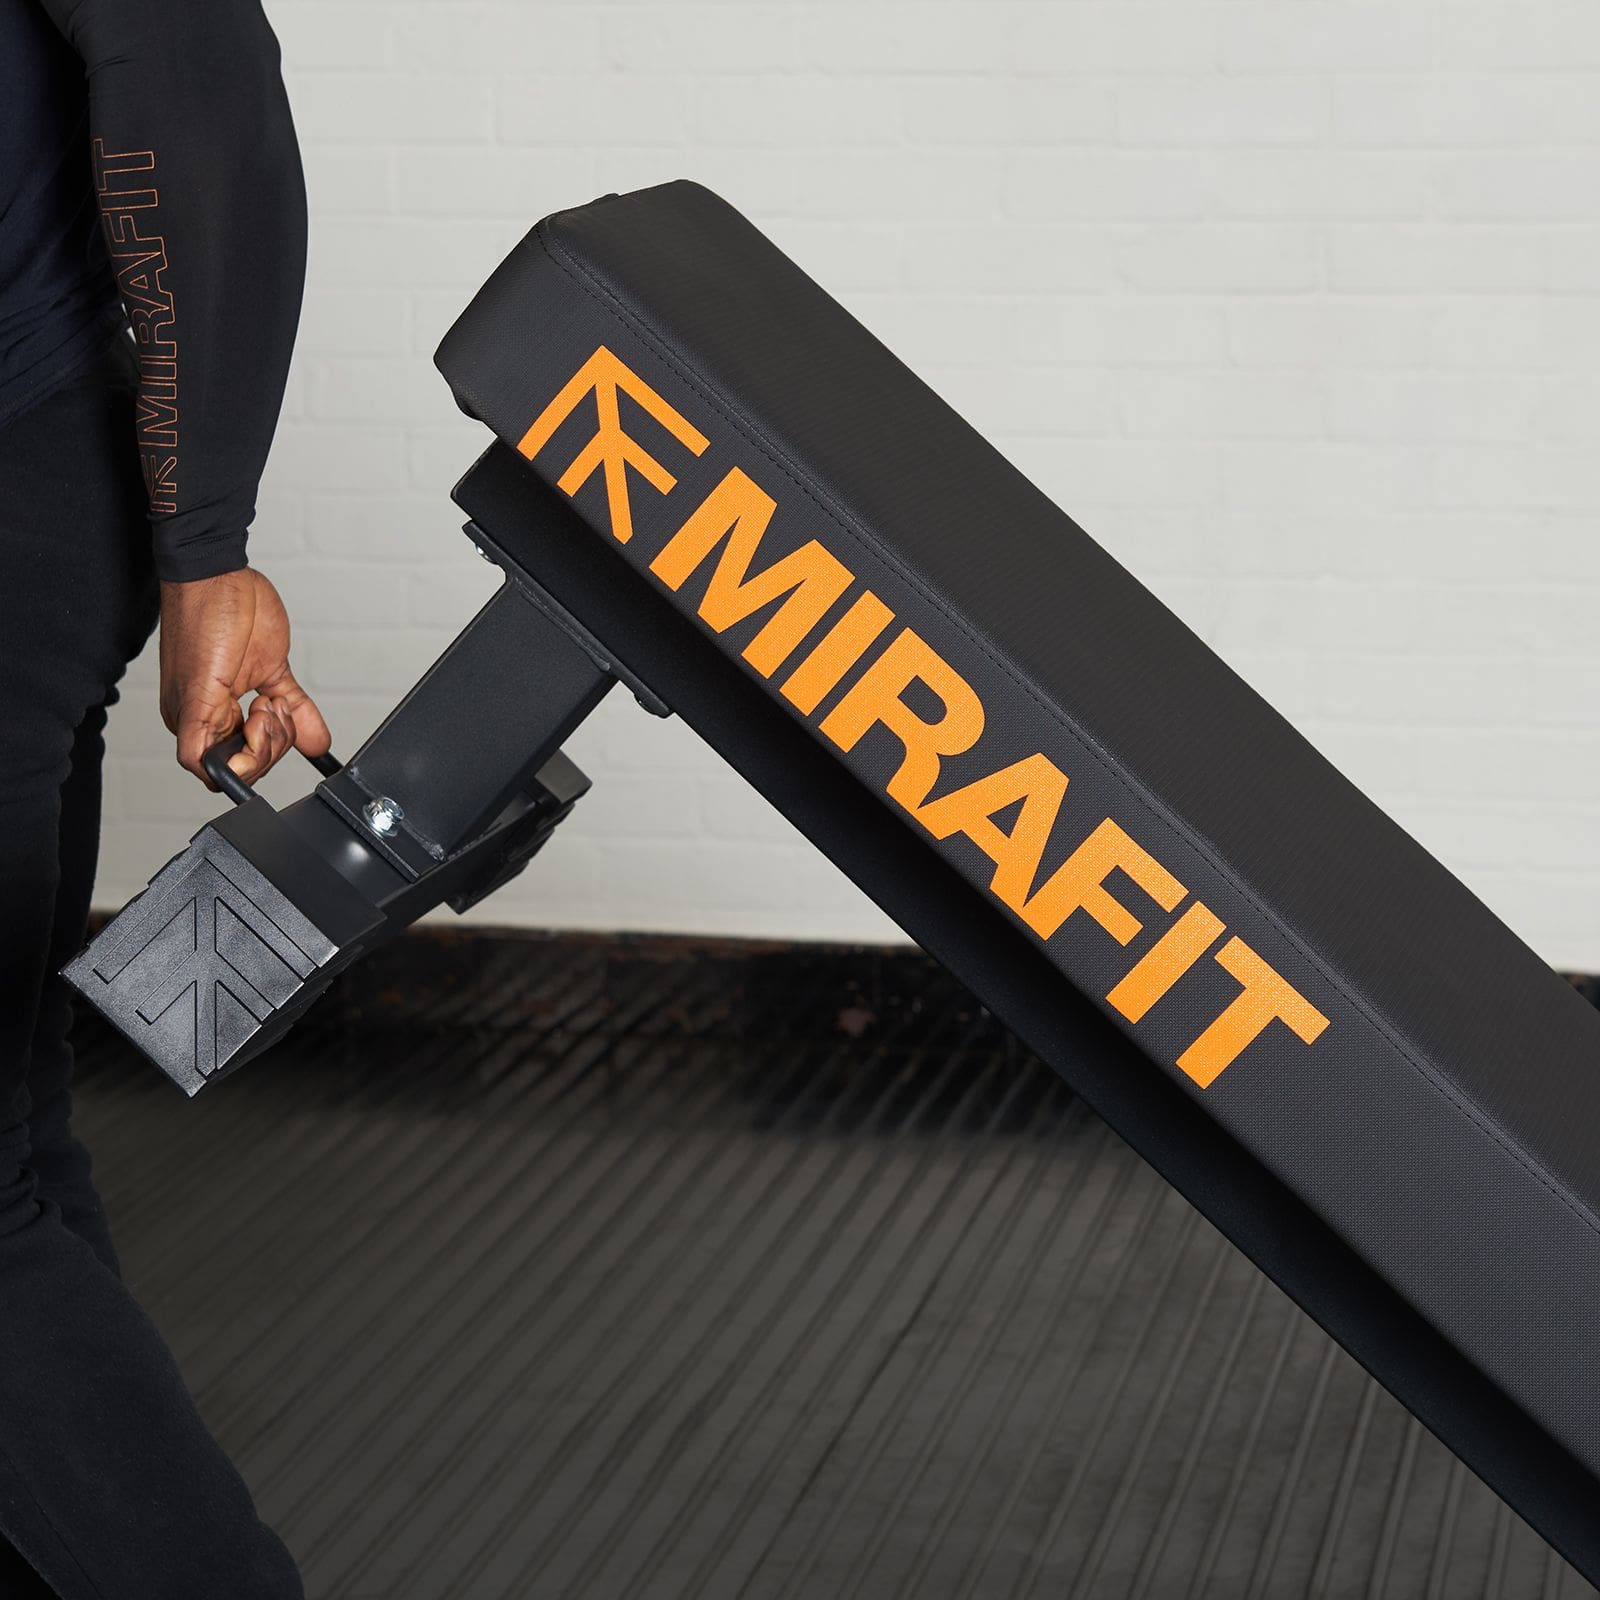 MIRAFIT M3 FLAT WEIGHT BENCH - Lifting Handle